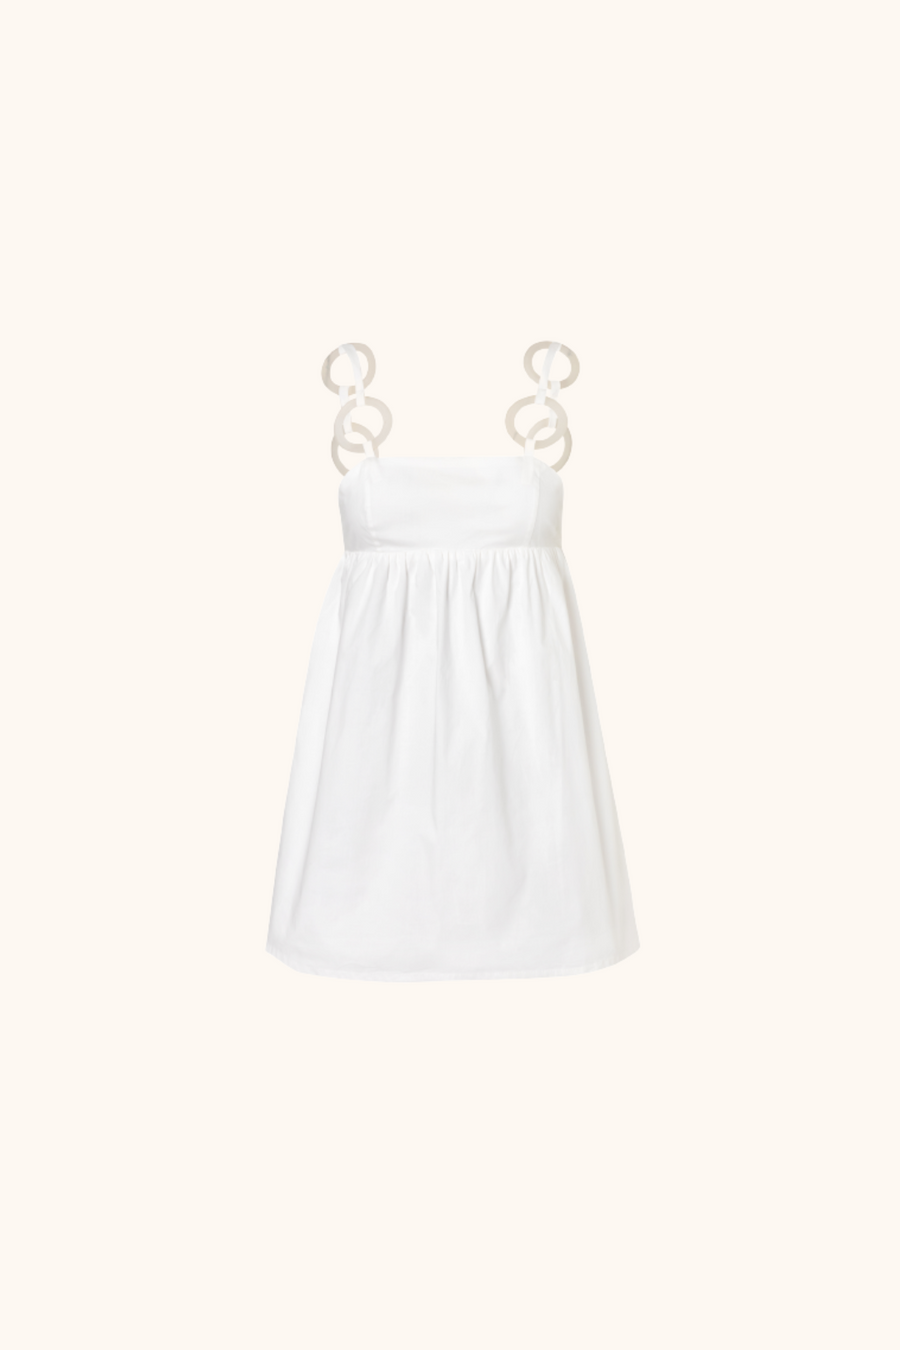 Bahama White Mini Dress